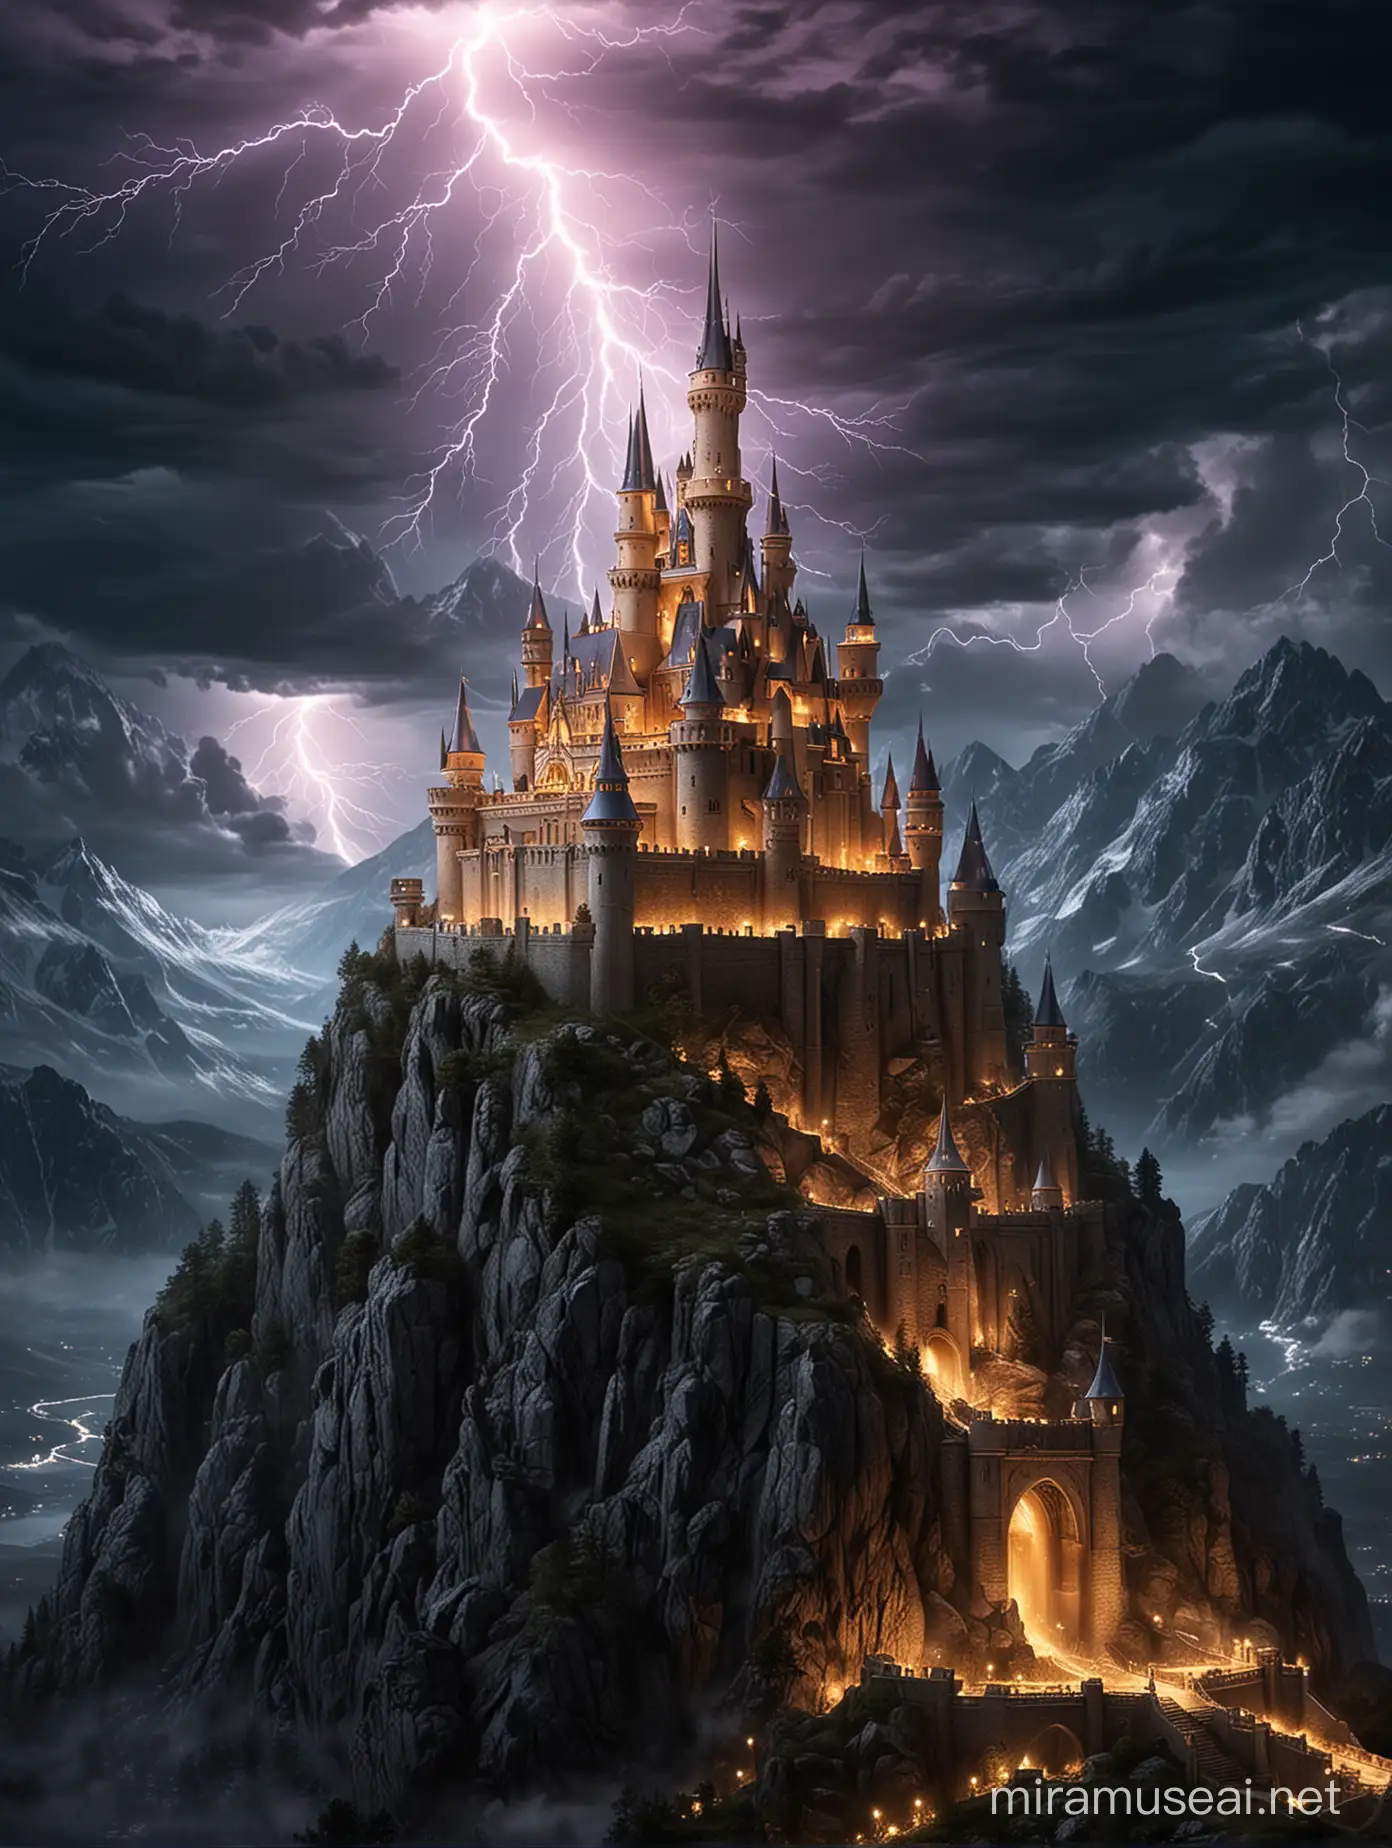 Fantasy Lightning Castle Struck in Mountain Landscape